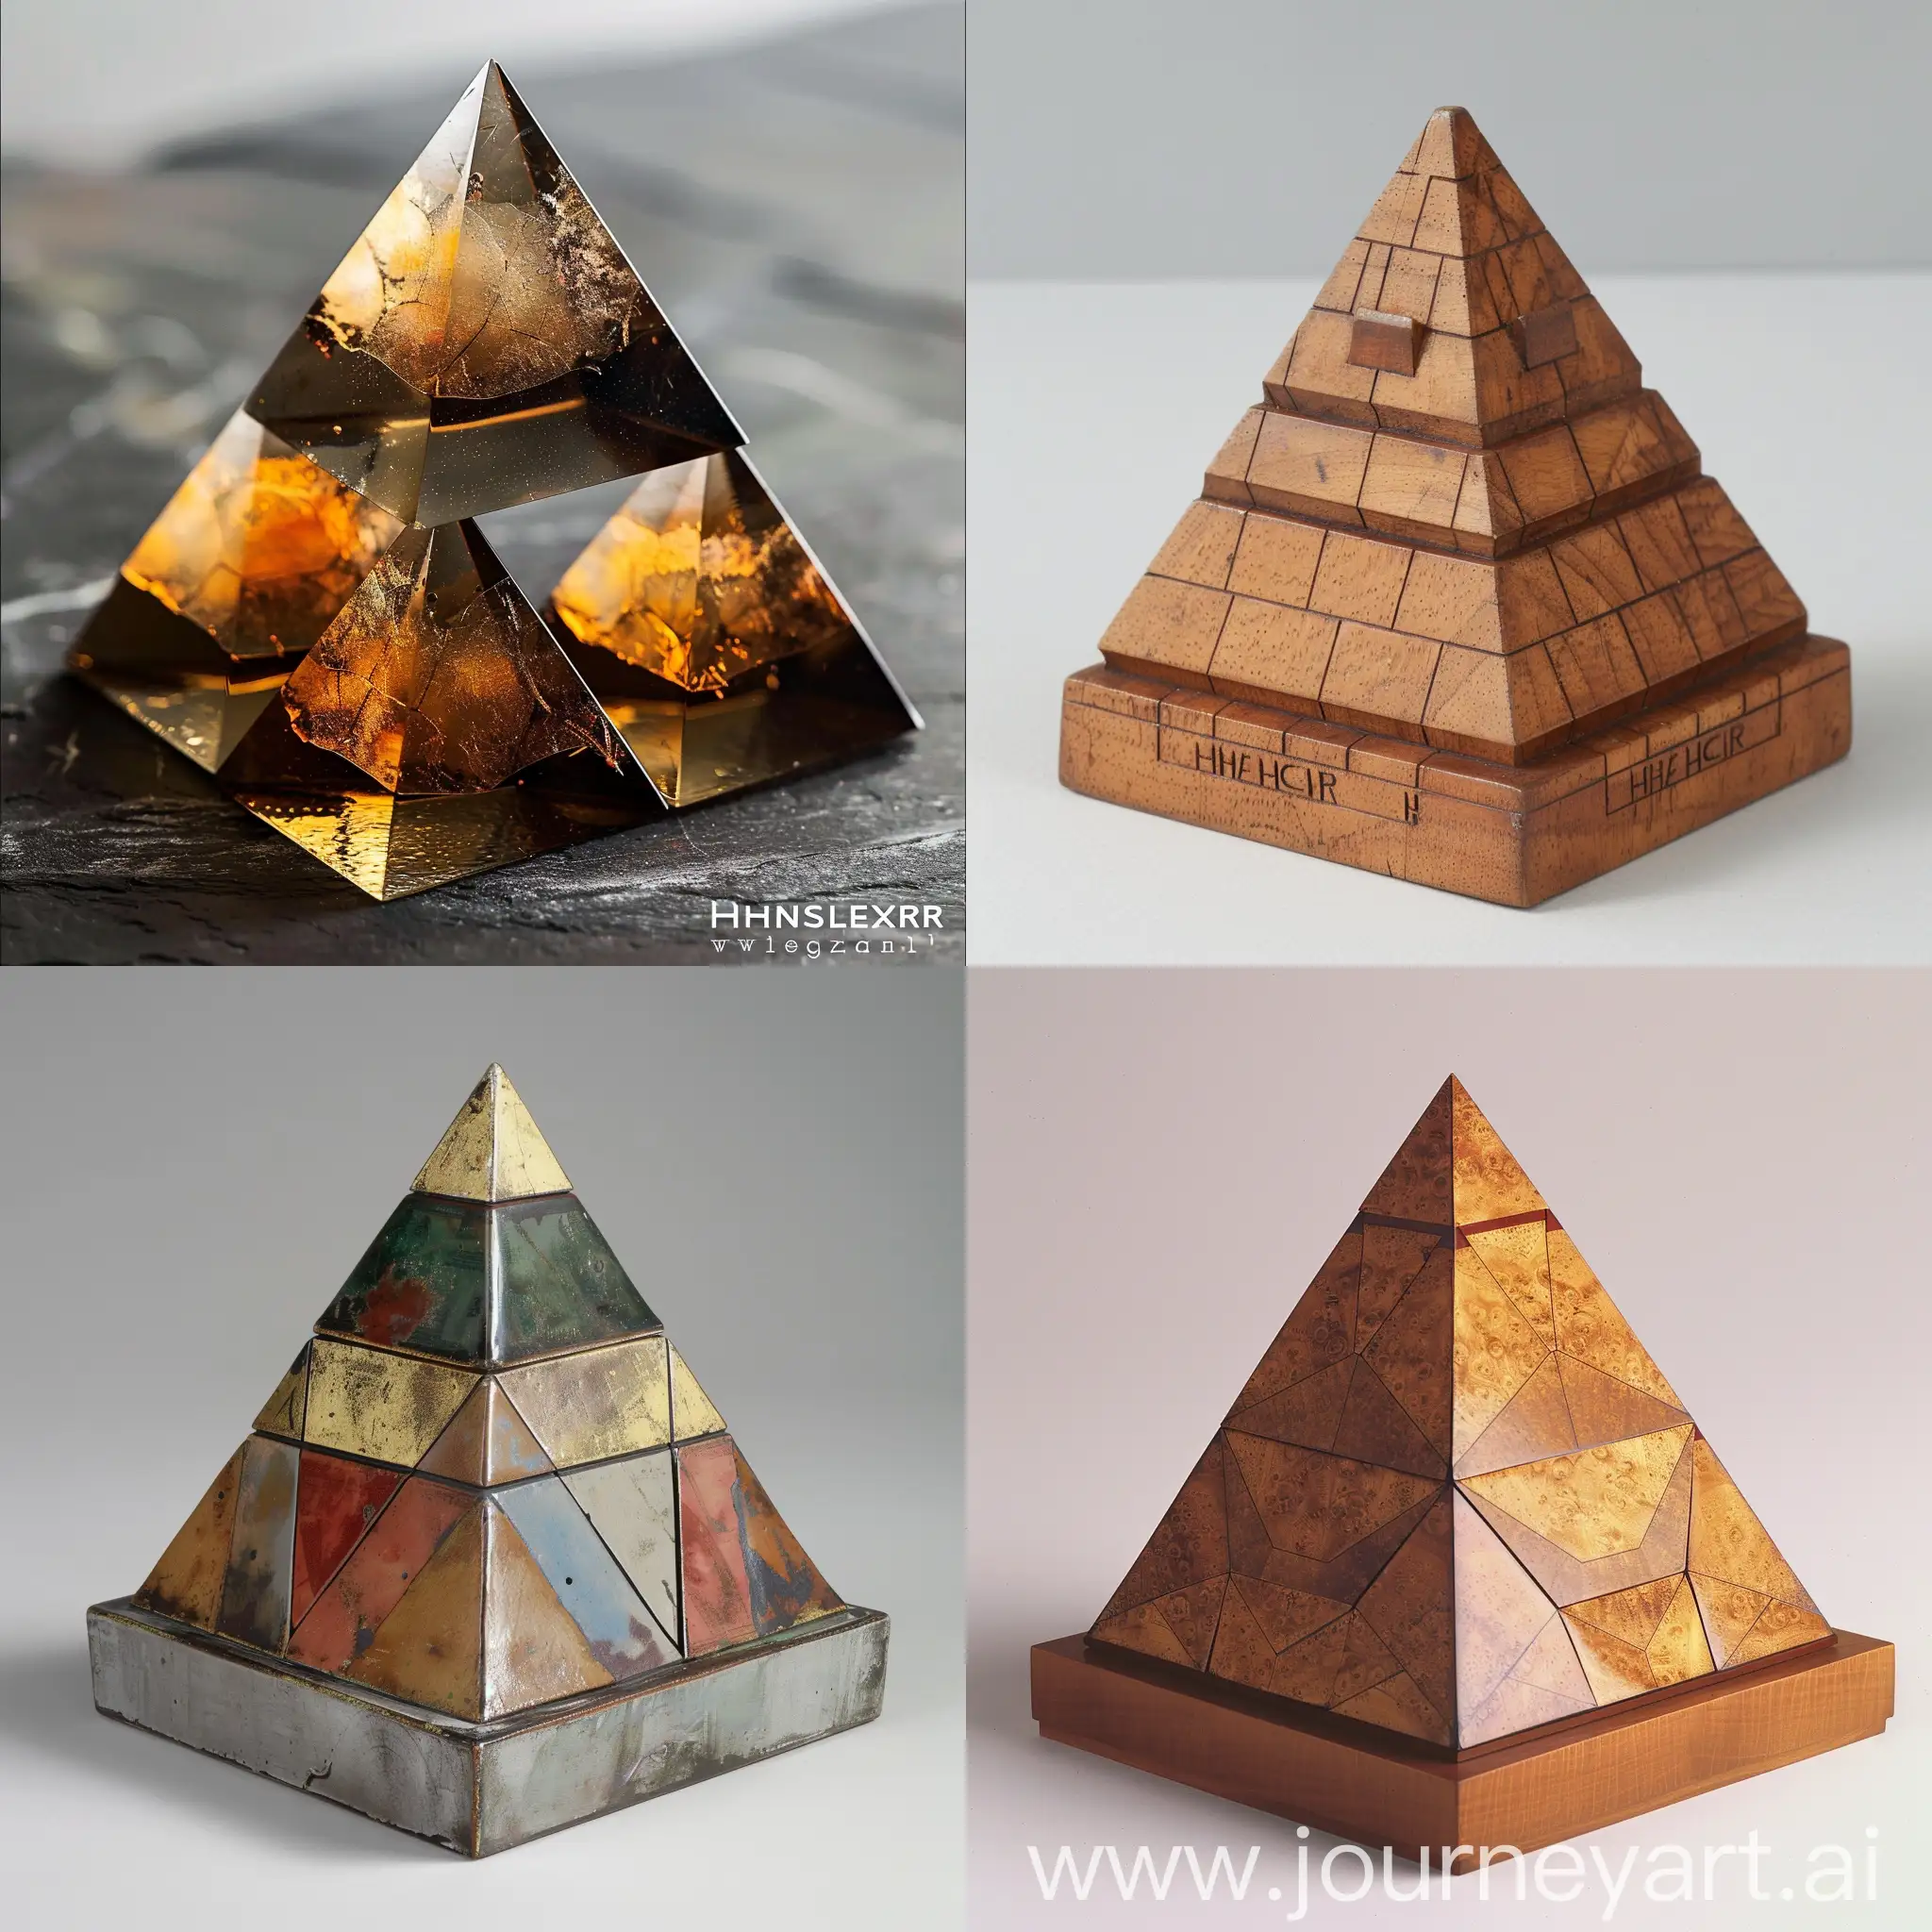 Hans-Lencker-Pyramidal-Object-Sculpture